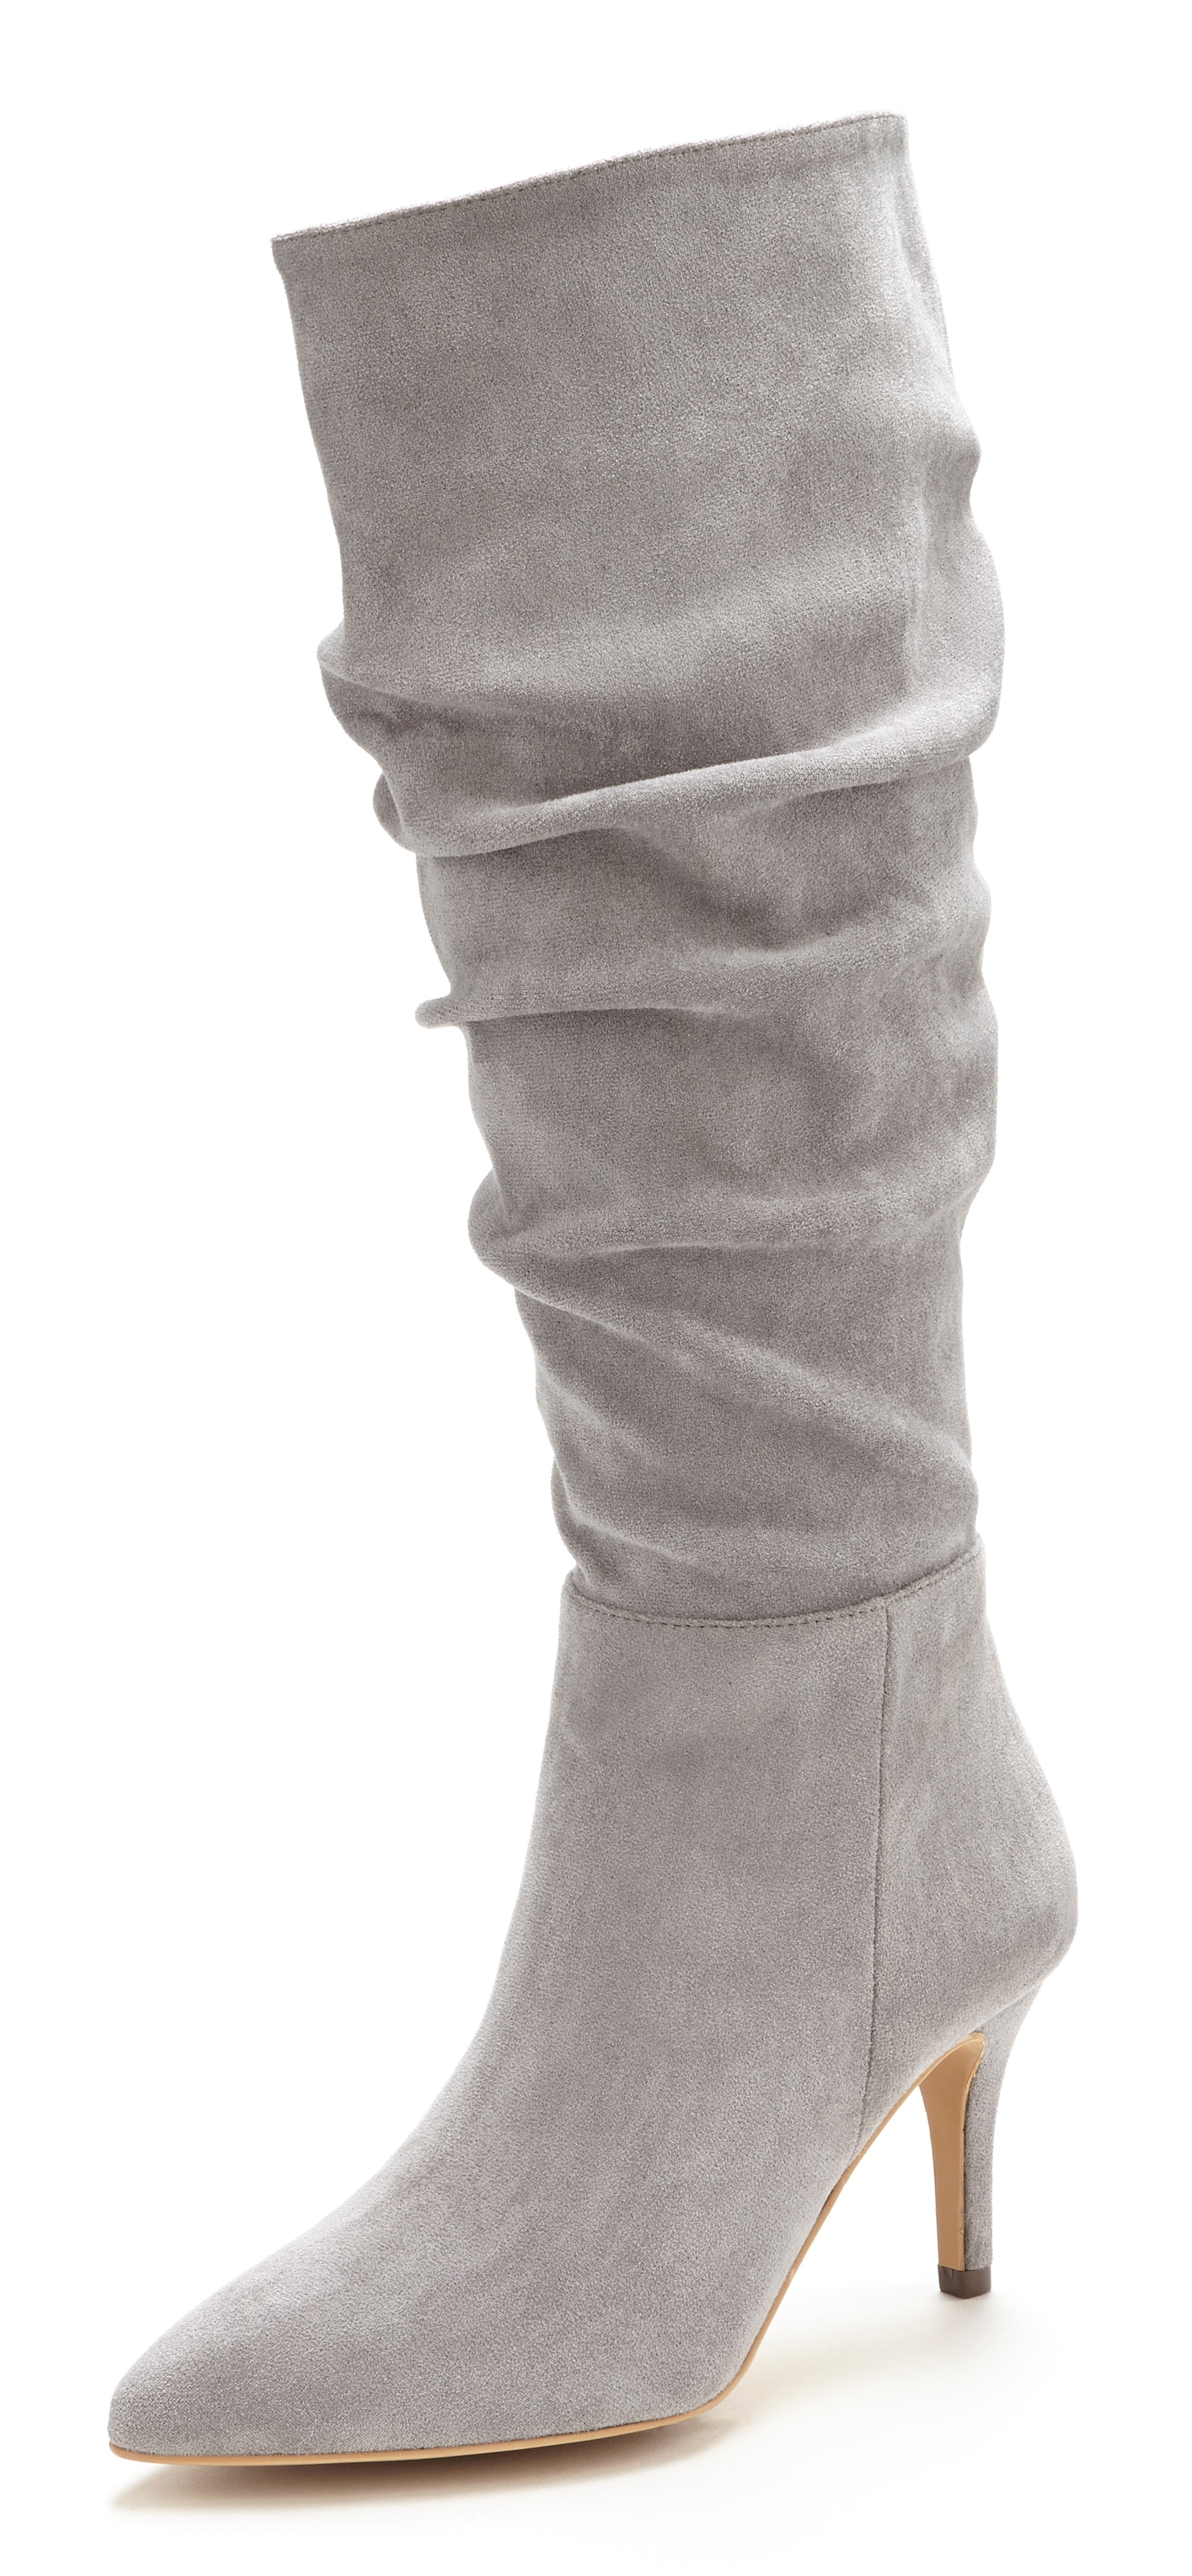 LASCANA Reißverschlussstiefel, mit modischer Raffung, Langschaft, High-Heel Stiefelette,Slouchy Boots